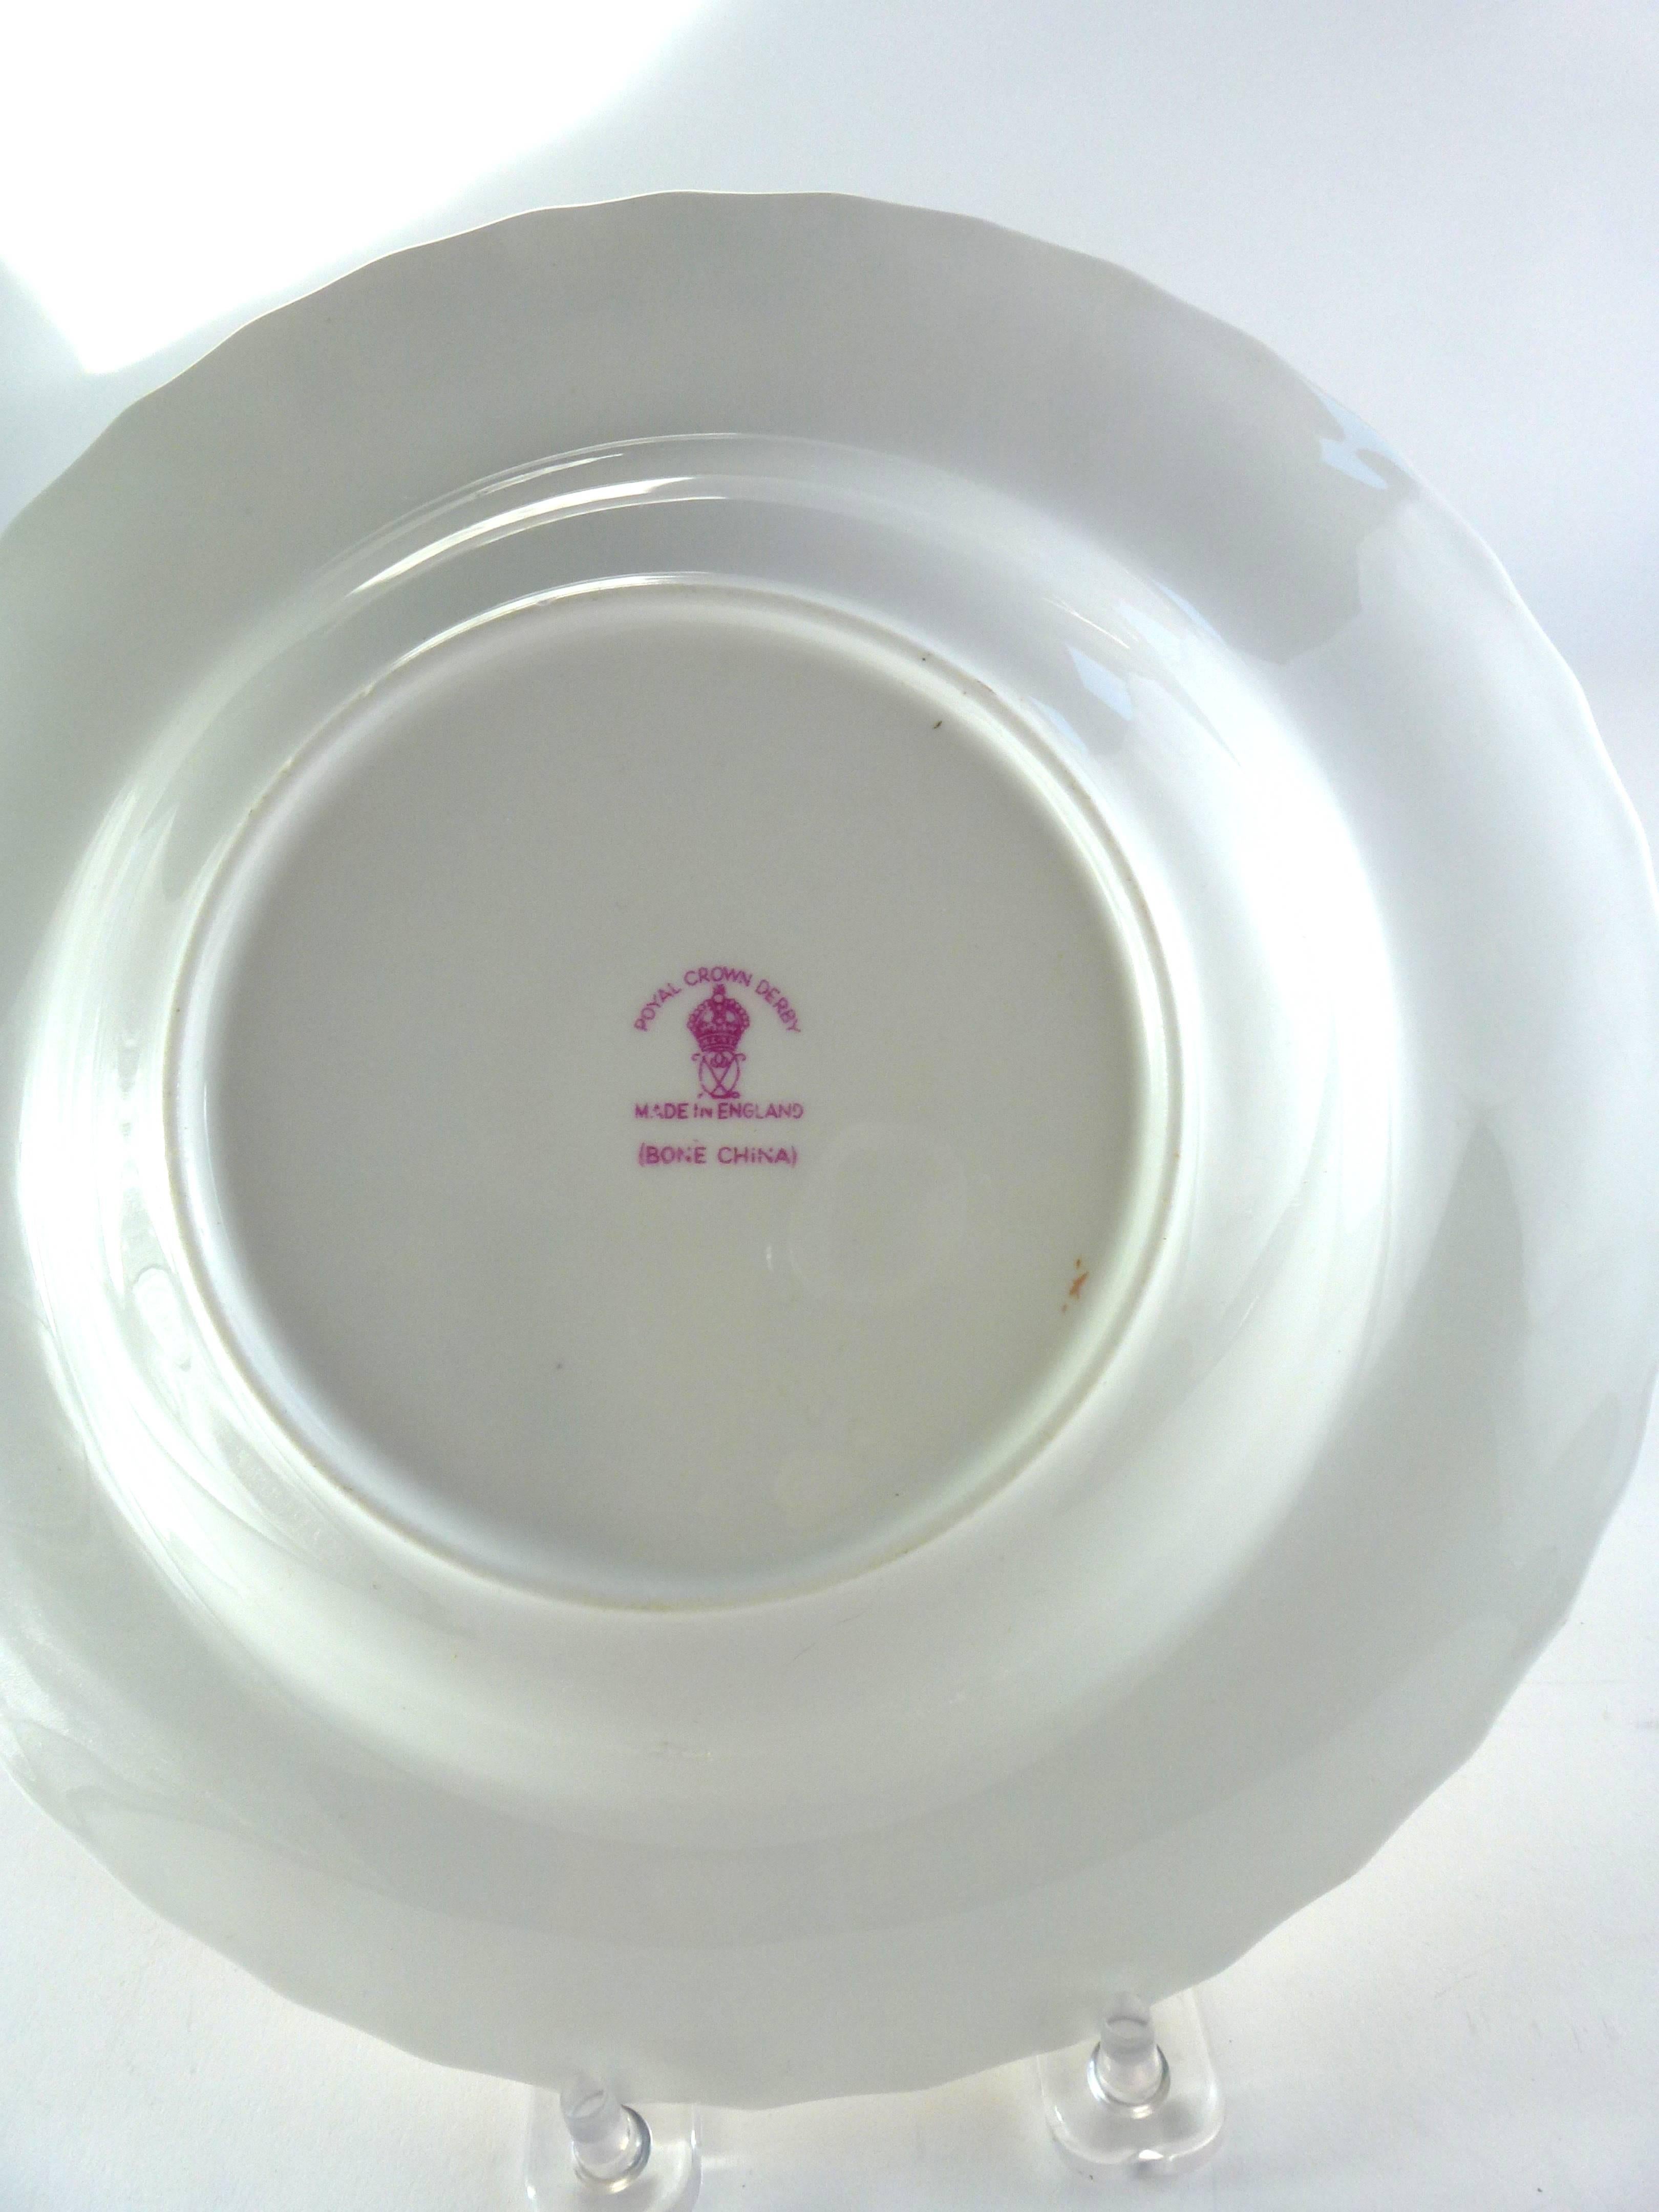 Royal Crown Derby porcelain Rougement pattern rim soup plates set of 12 

Royal Crown Derby Porcelain Rougement pattern rim soup plates or soup bowls 8 3/8